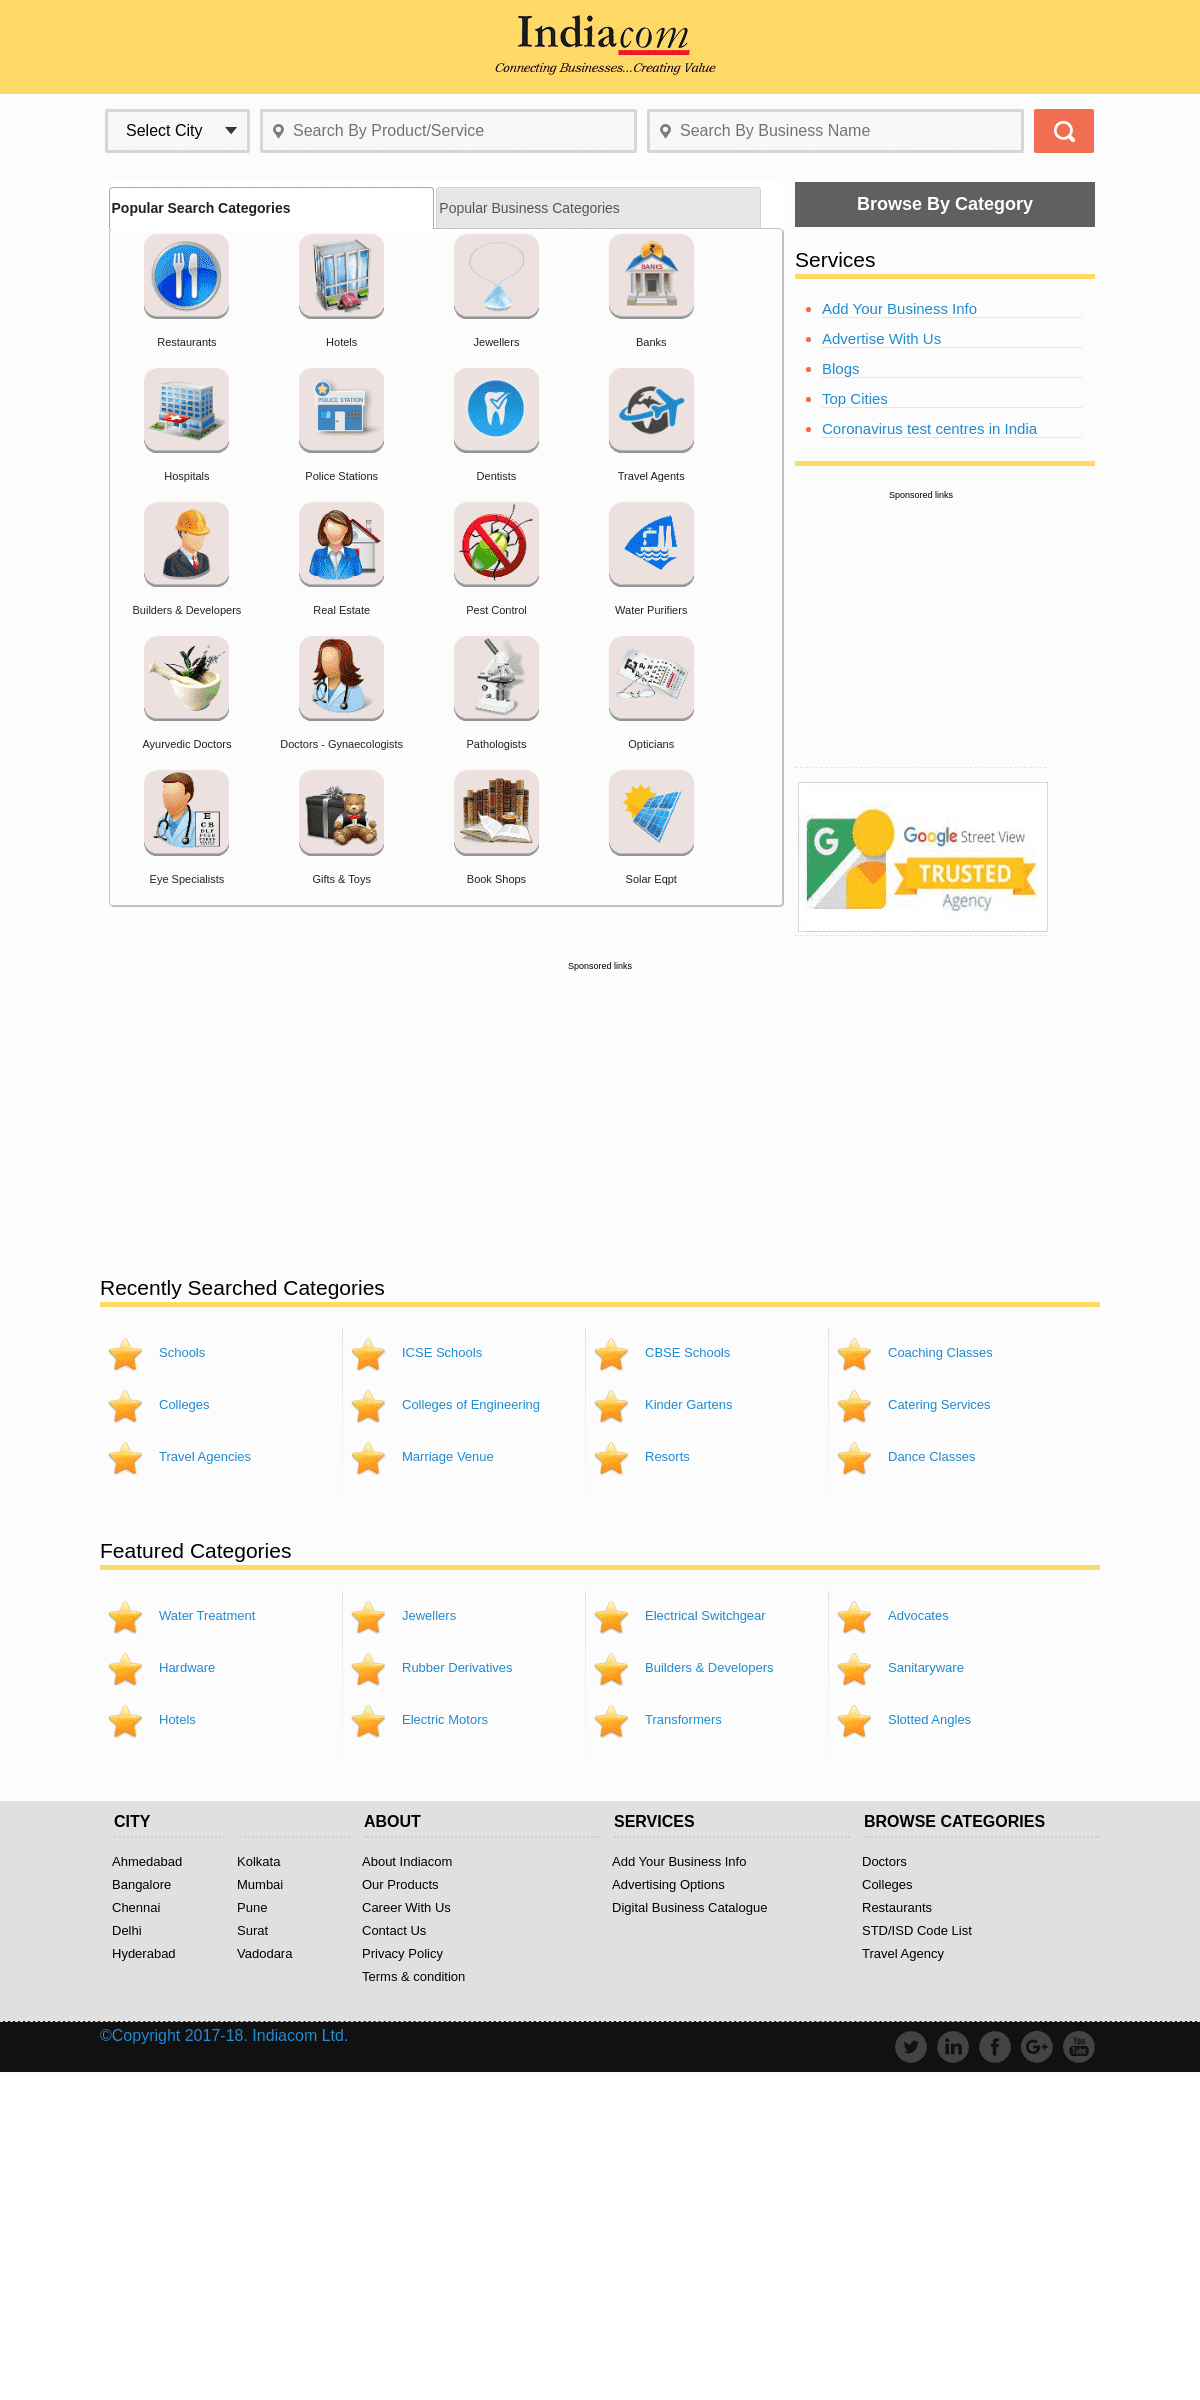 A complete backup of indiacom.com